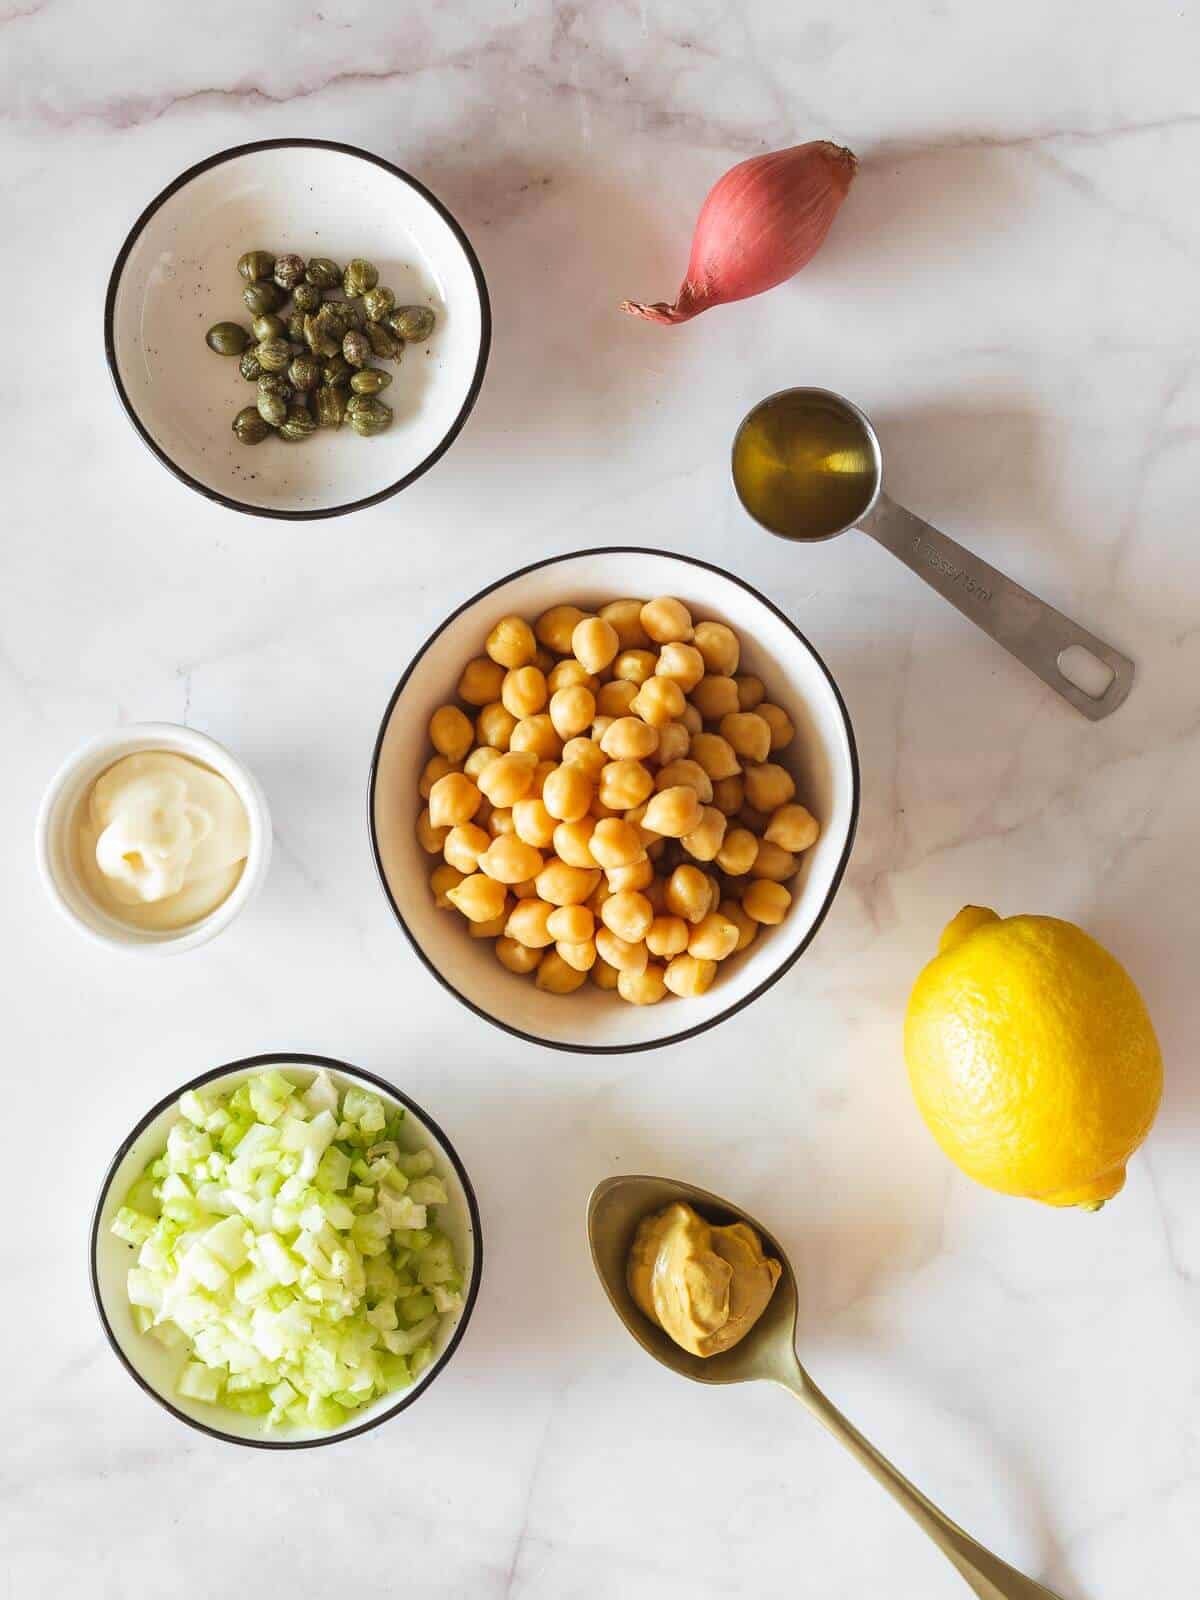 Ingredients to make a vegan chickpea salad